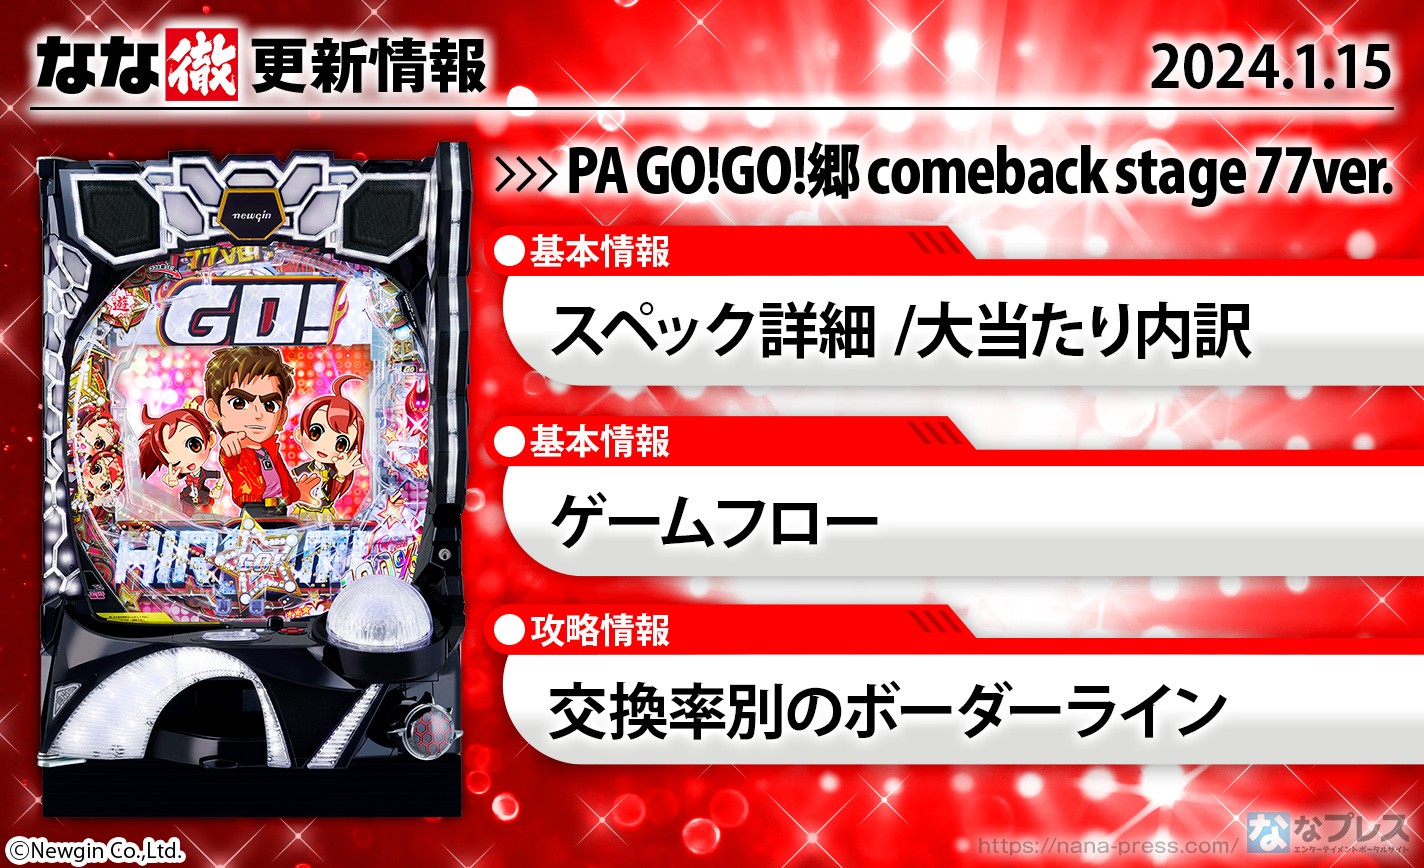 【PA GO!GO!郷comeback stage 77ver.】機種ページを公開しました。【1月15日解析情報更新】 eyecatch-image